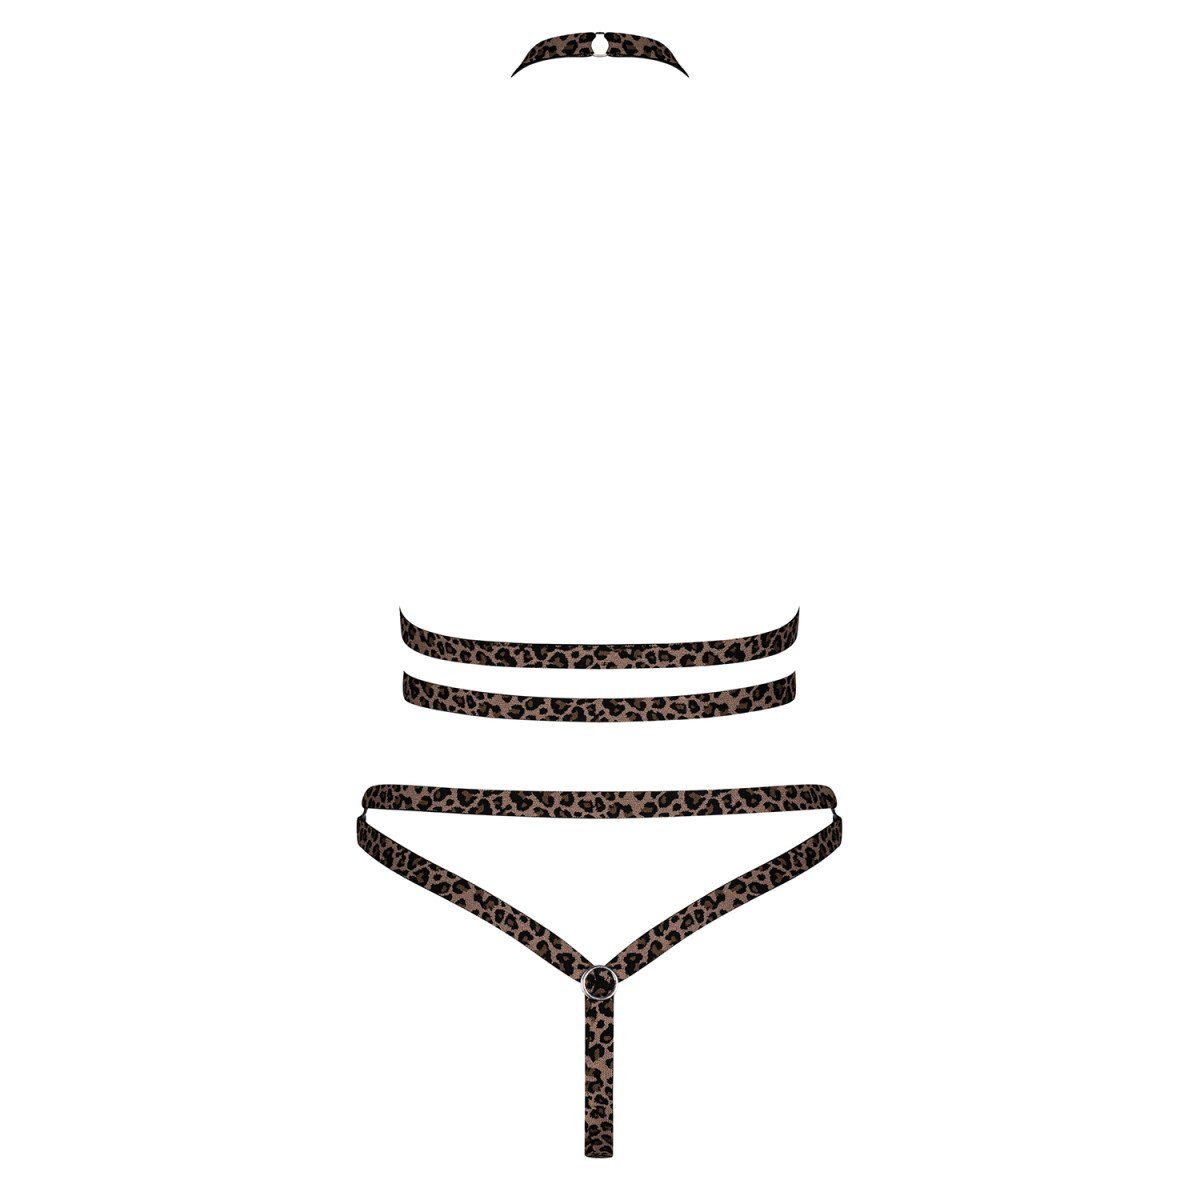 Obsessive Body Tigrita 2pcs (XXL) set Size Plus OB - brown